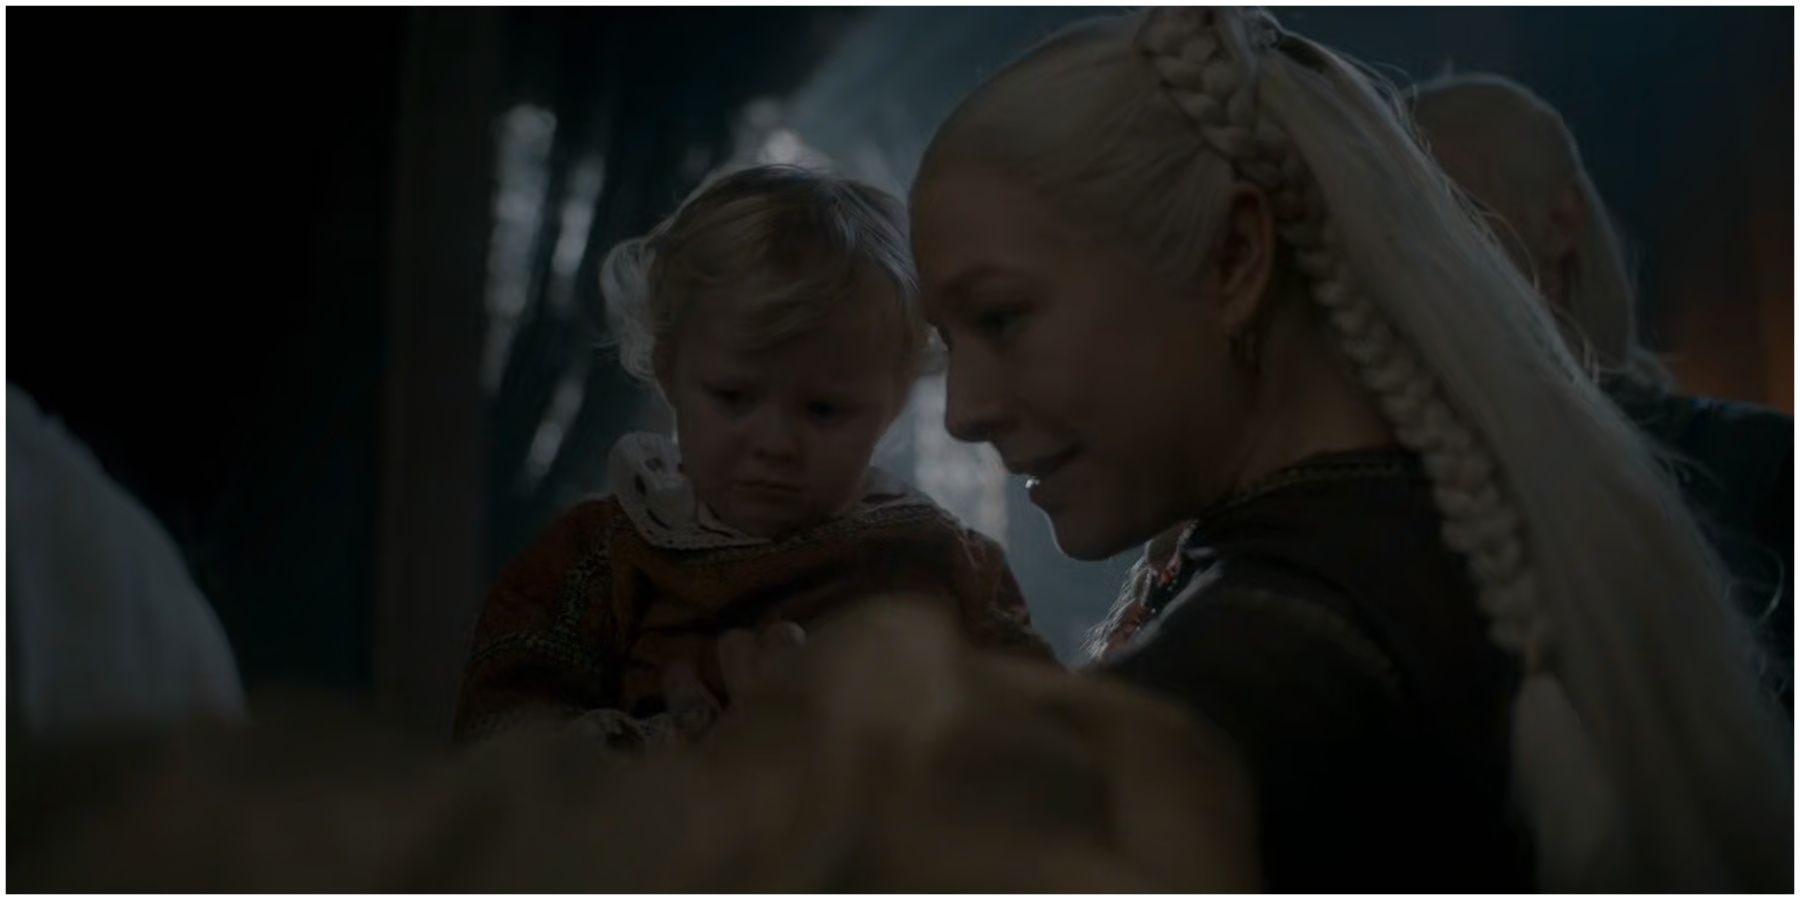 Prince Viserys and Rhaenyra Targaryen in House of the Dragon.